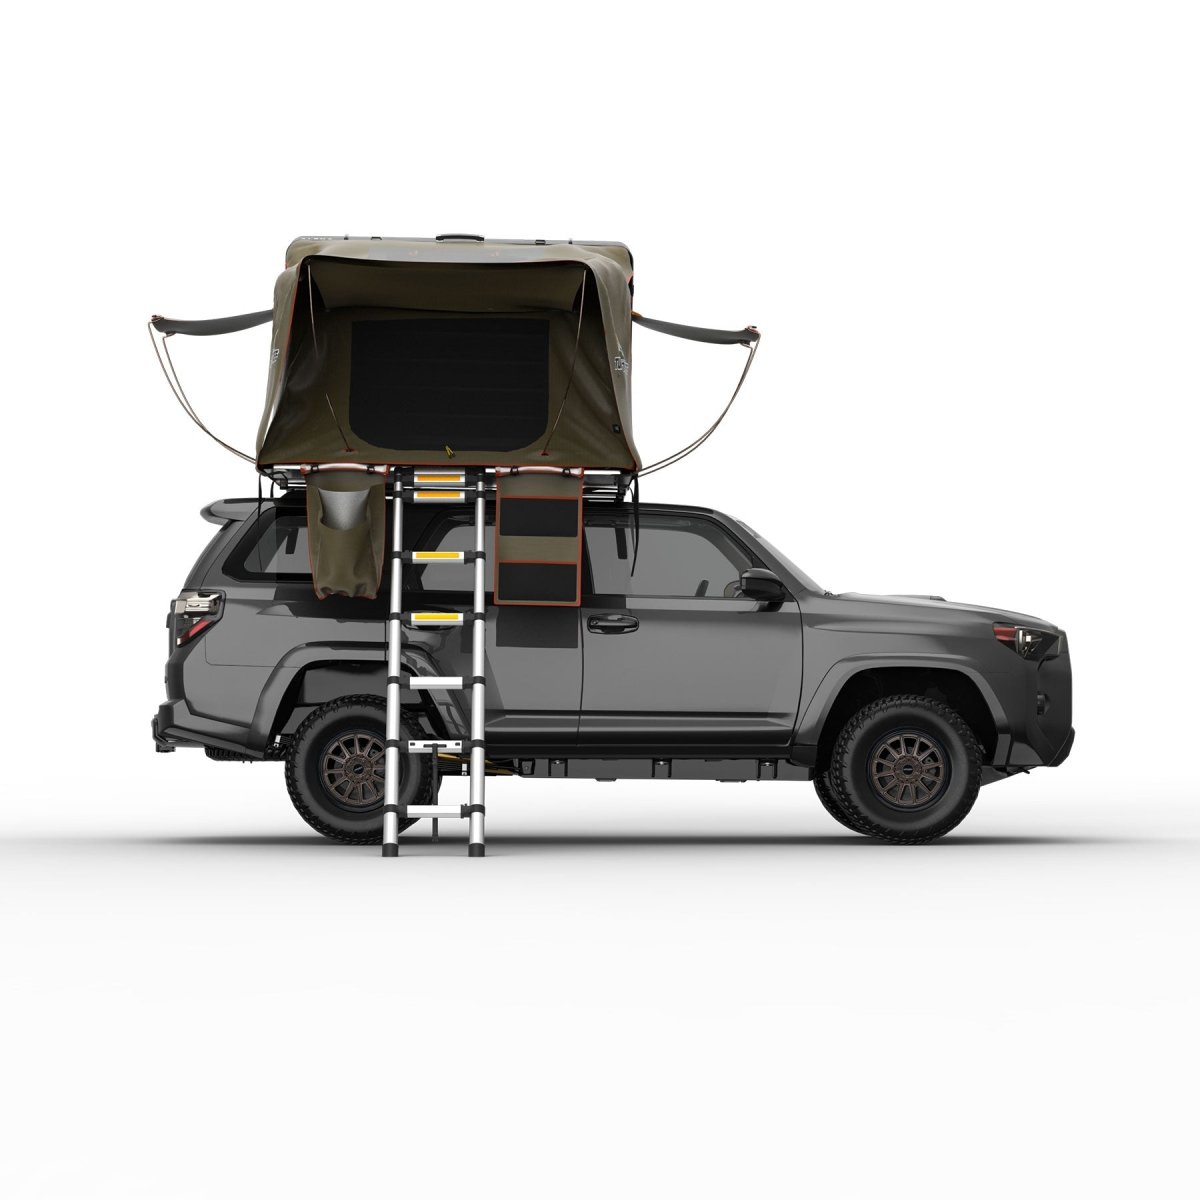 Tuff Stuff® ALPHA™ Hard Top Side Open Tent, Black, 3+ Person - Tuff Stuff Overland - Roof Top Tent